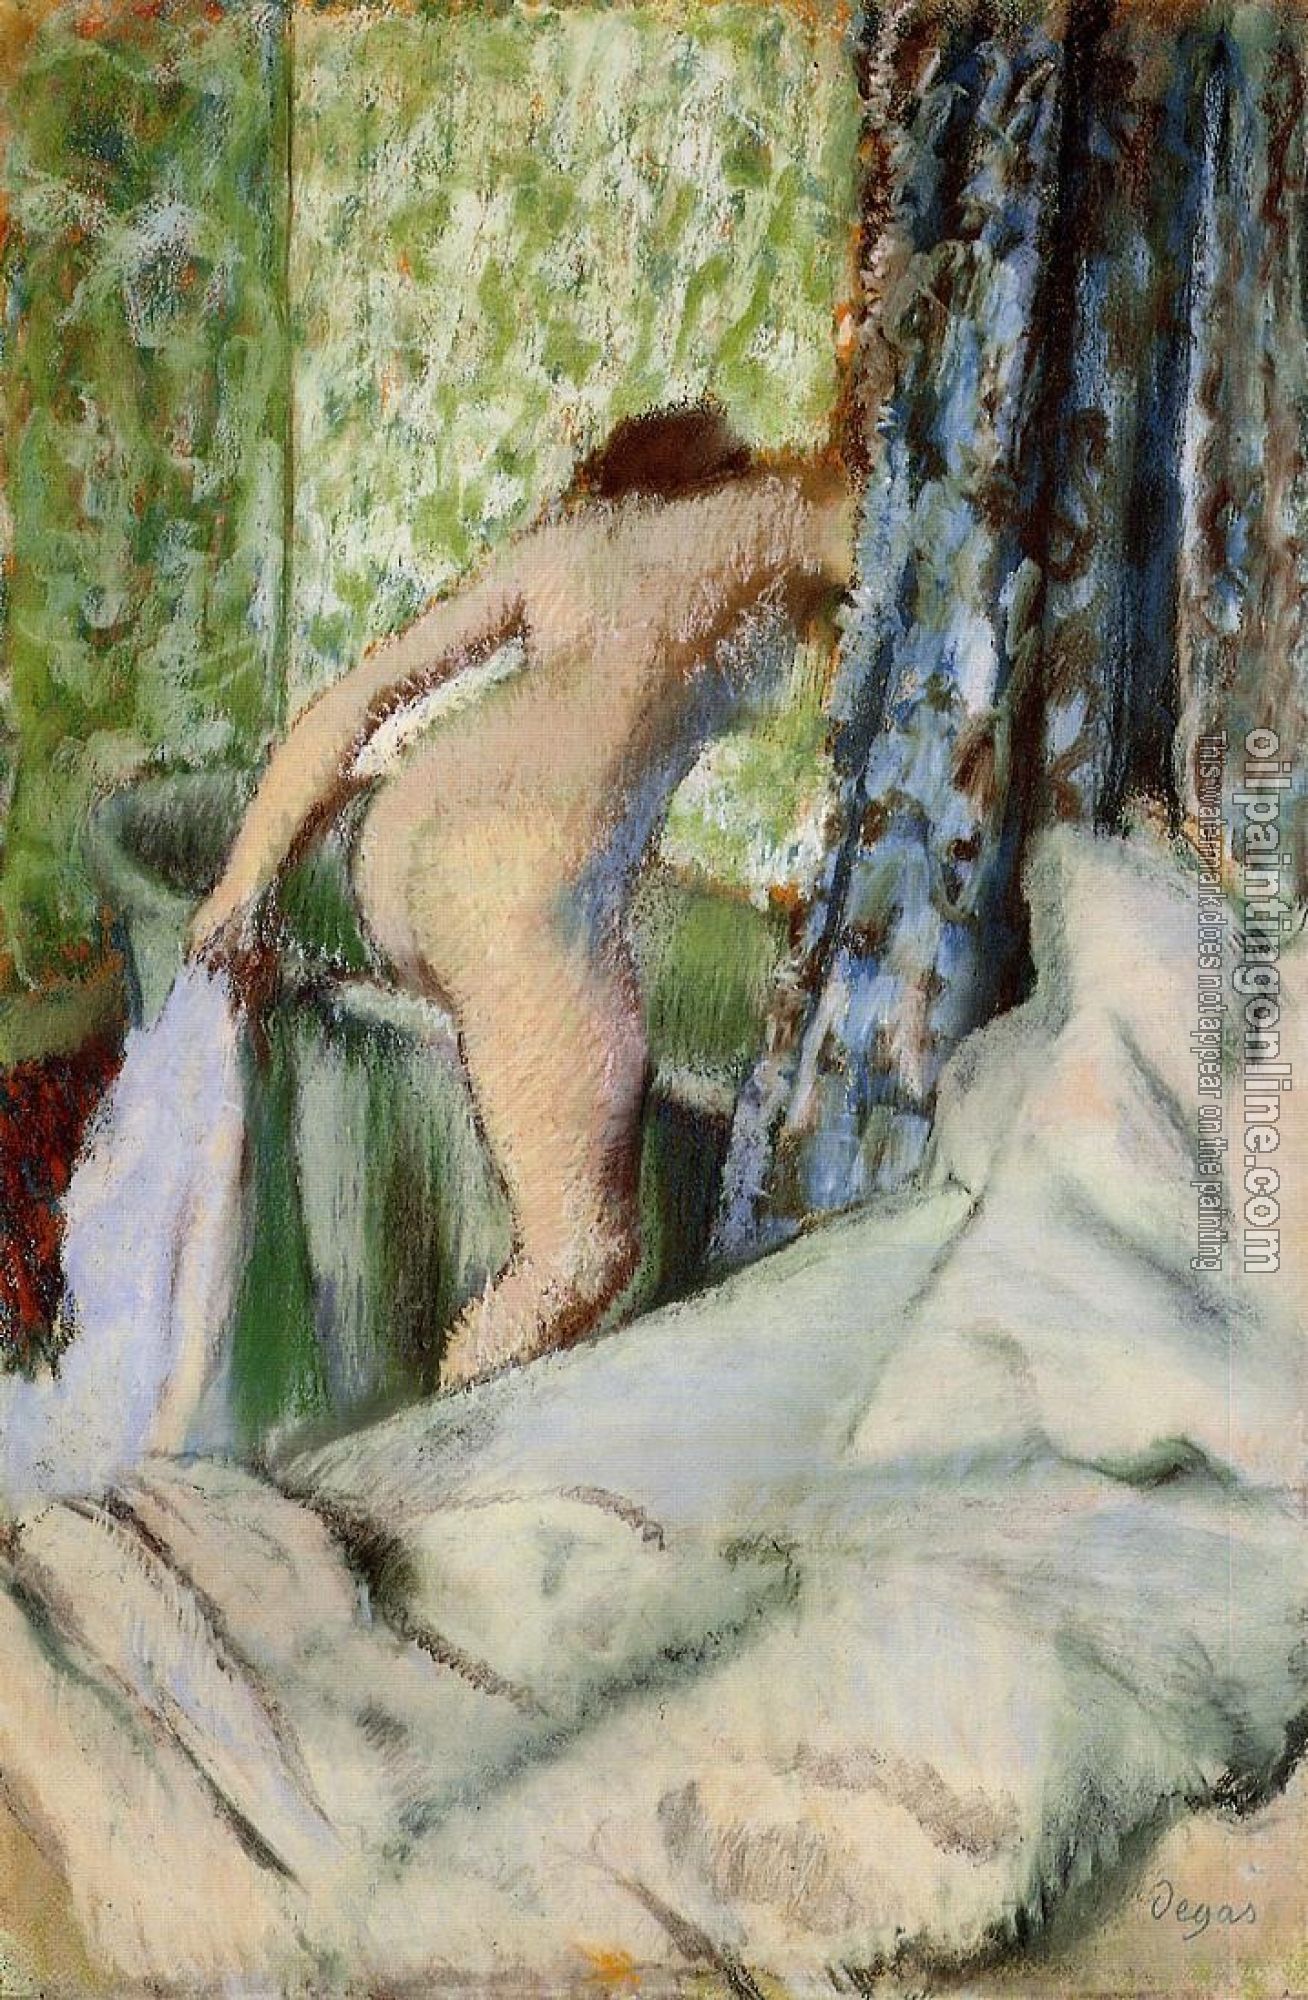 Degas, Edgar - The Morning Bath